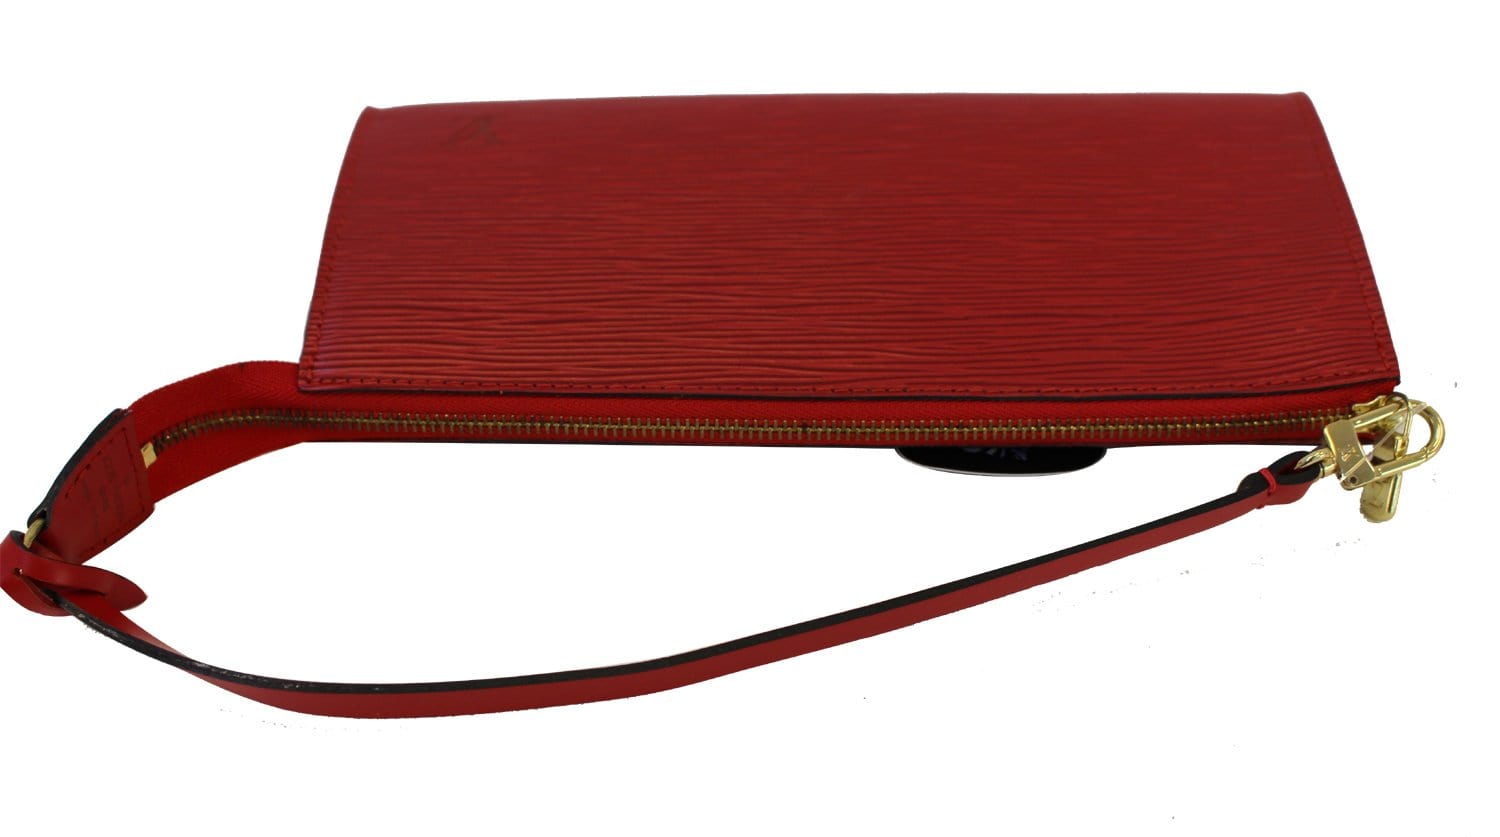 Louis Vuitton Pochette Accessoire in Red Epi leather – The Hosta